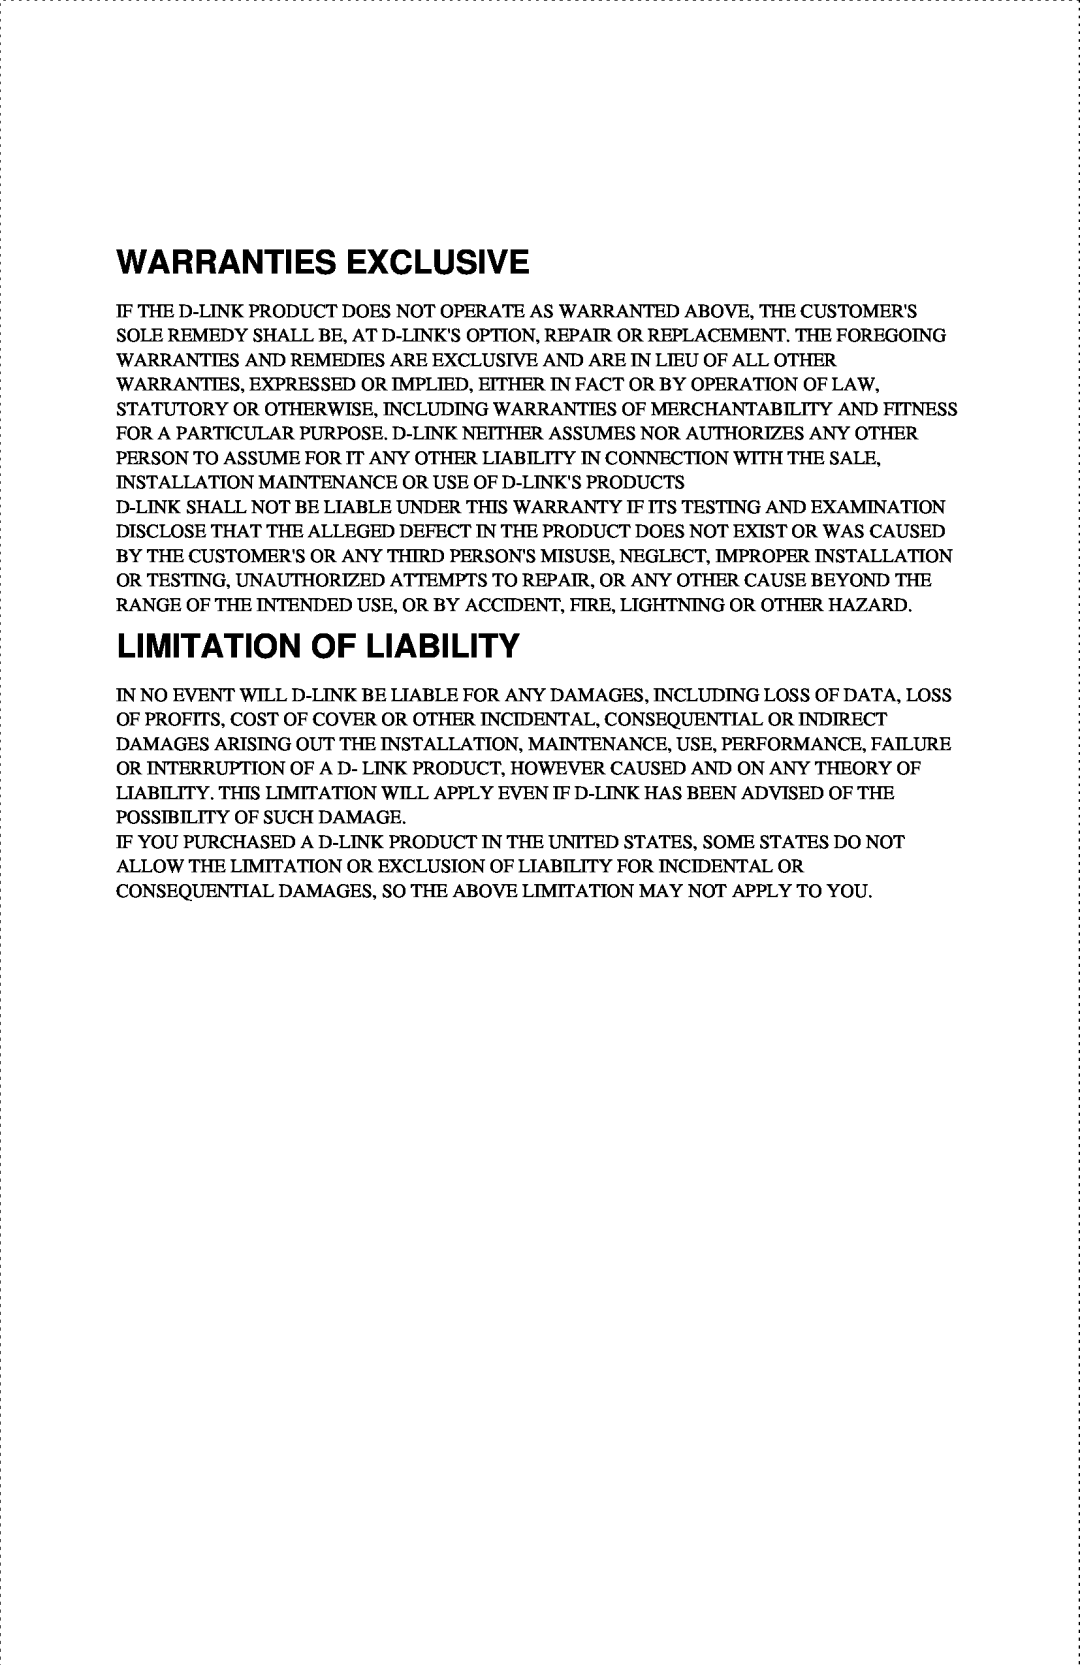 D-Link DES-1004 manual Warranties Exclusive, Limitation Of Liability 